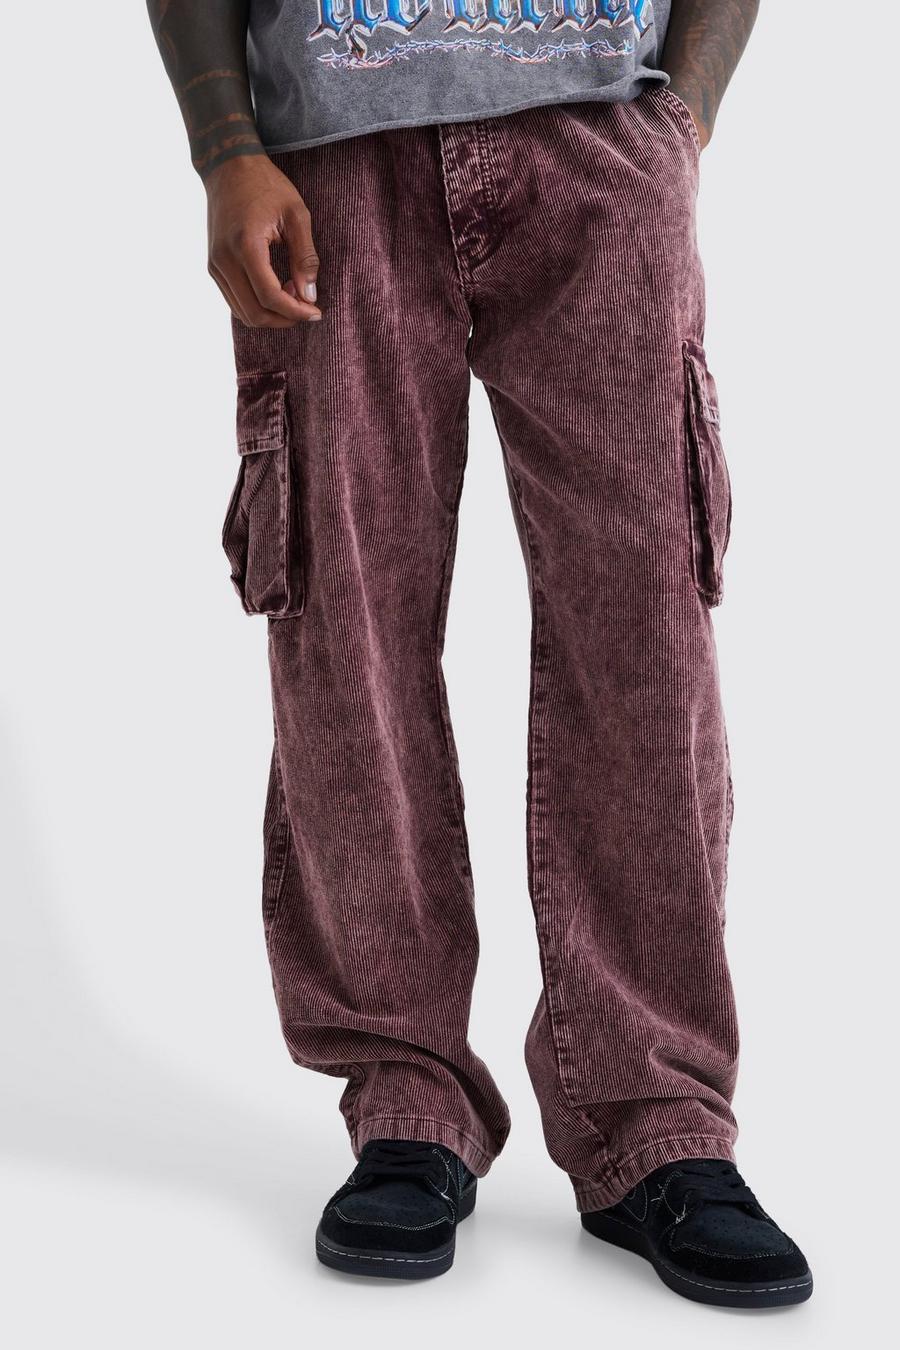 Men's Corduroy Cargo Pants Casual Straight Leg Multi Pockets